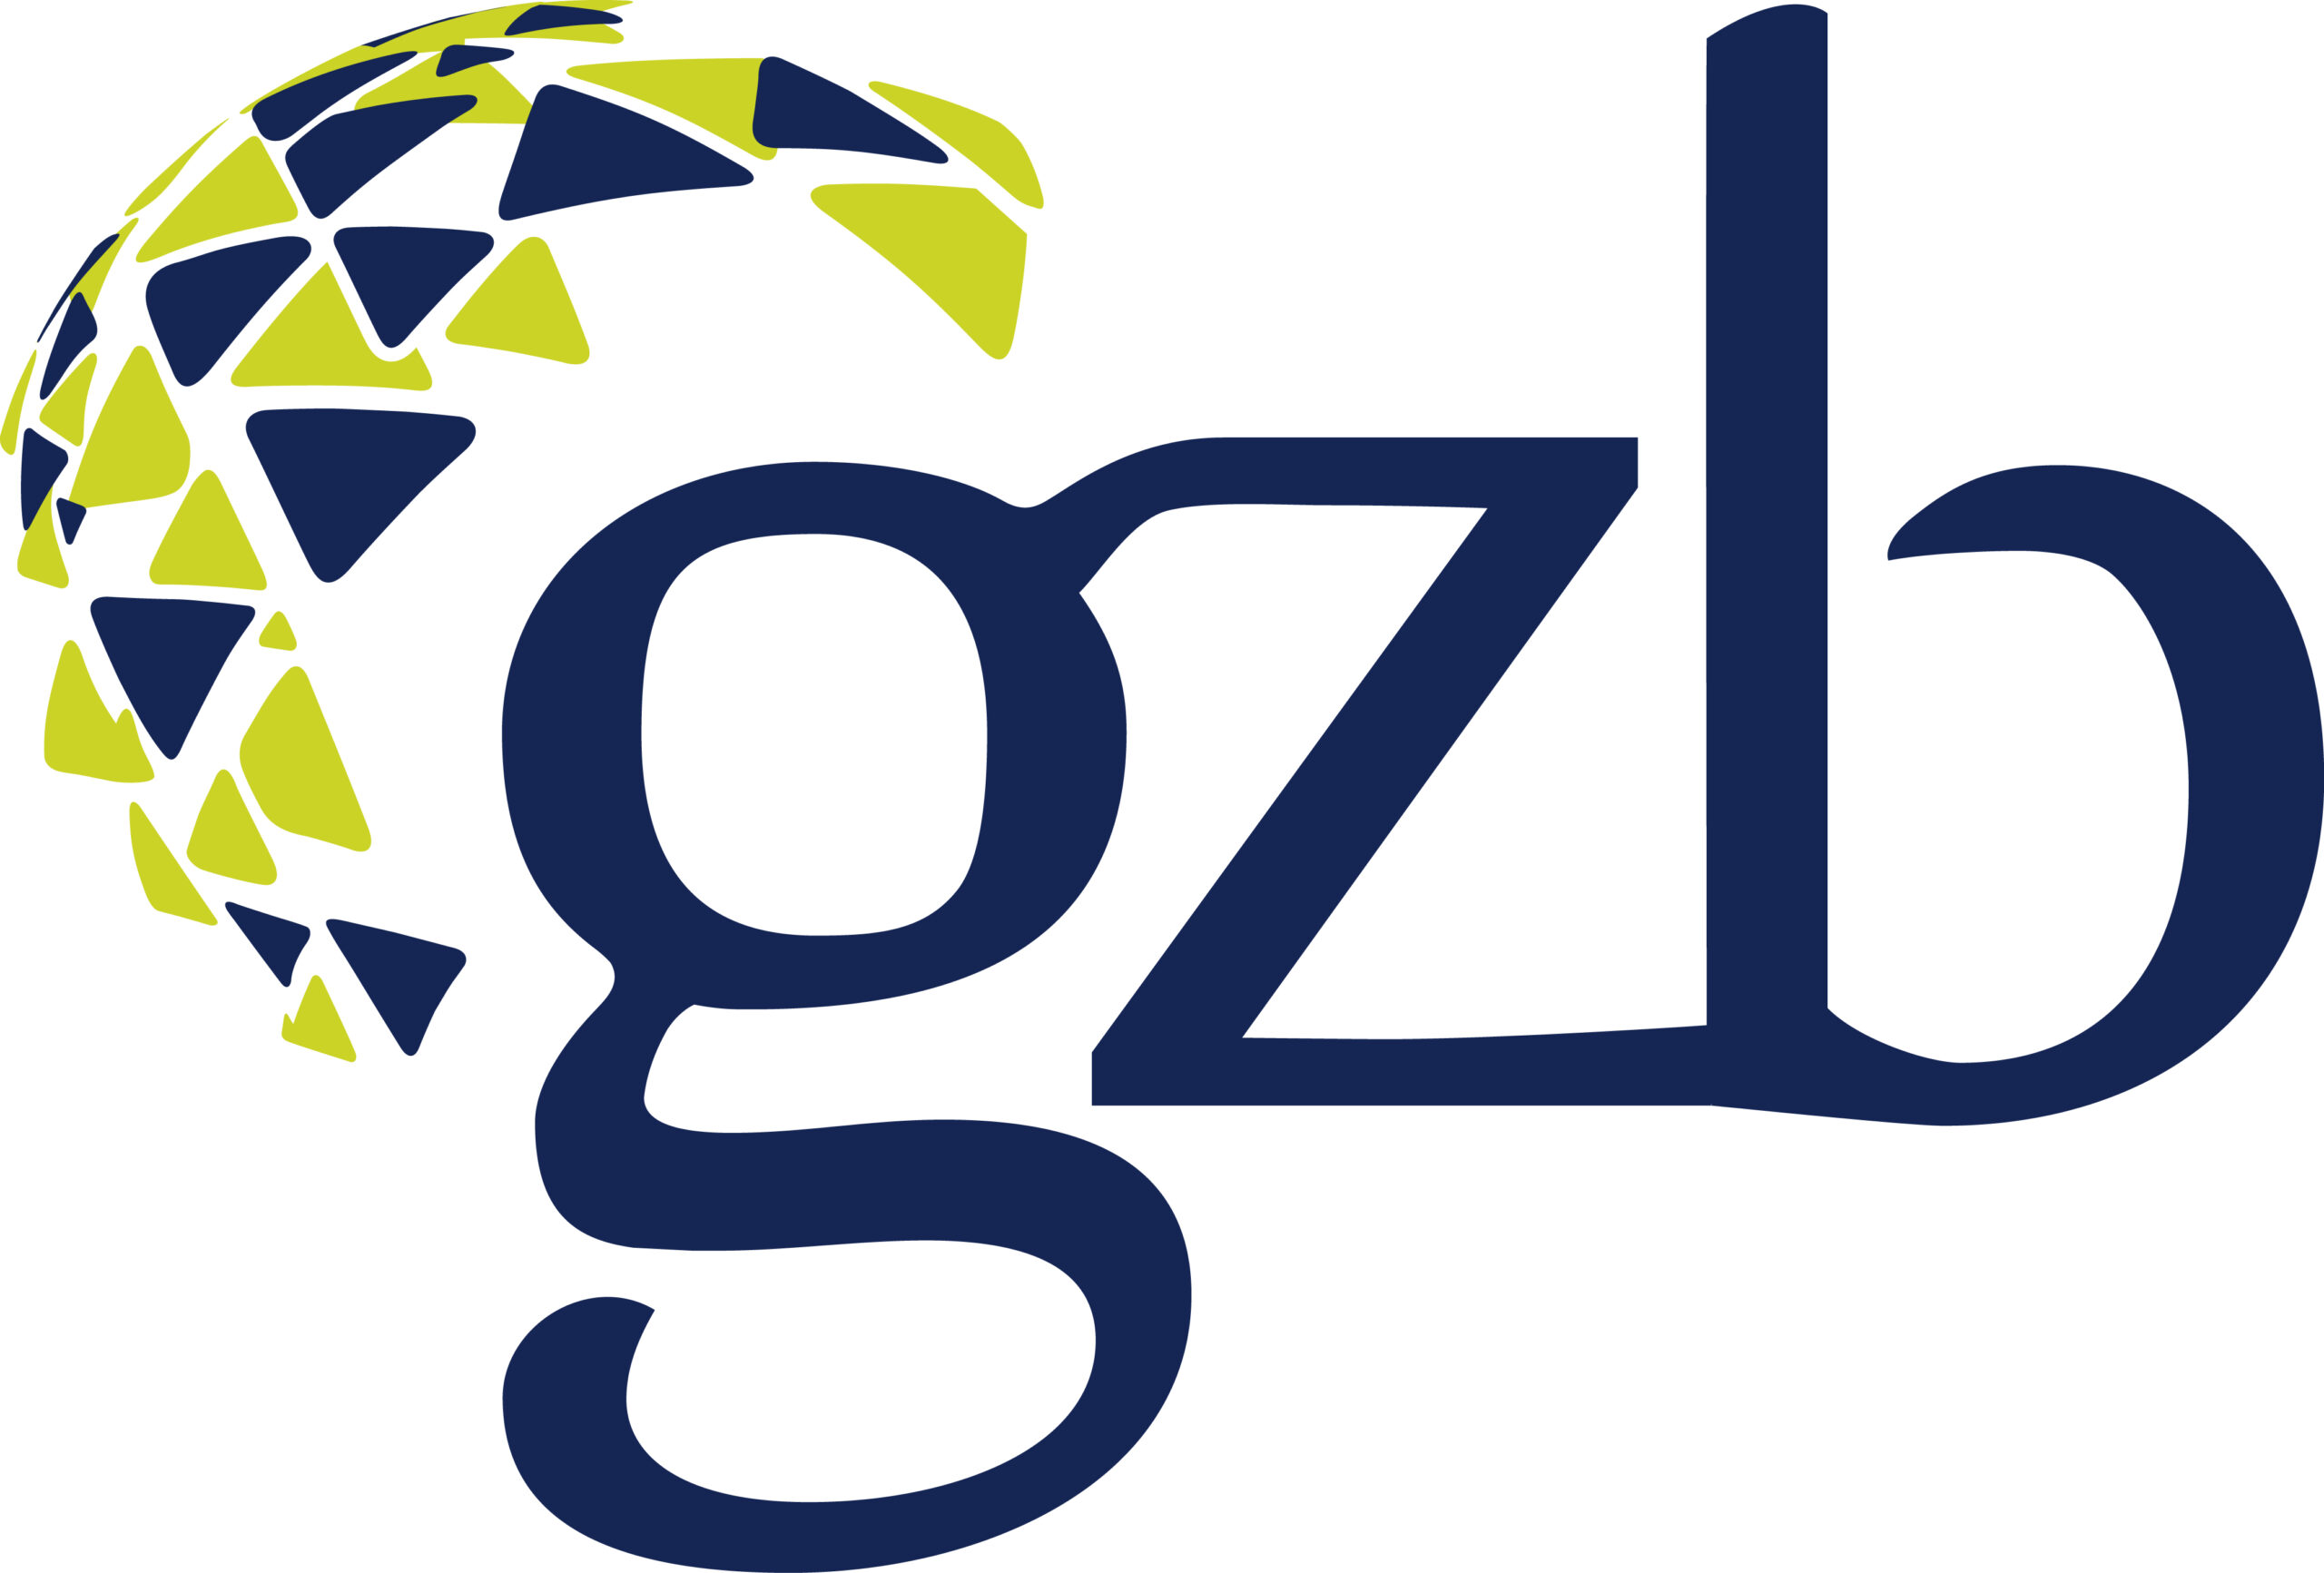 GZB logo